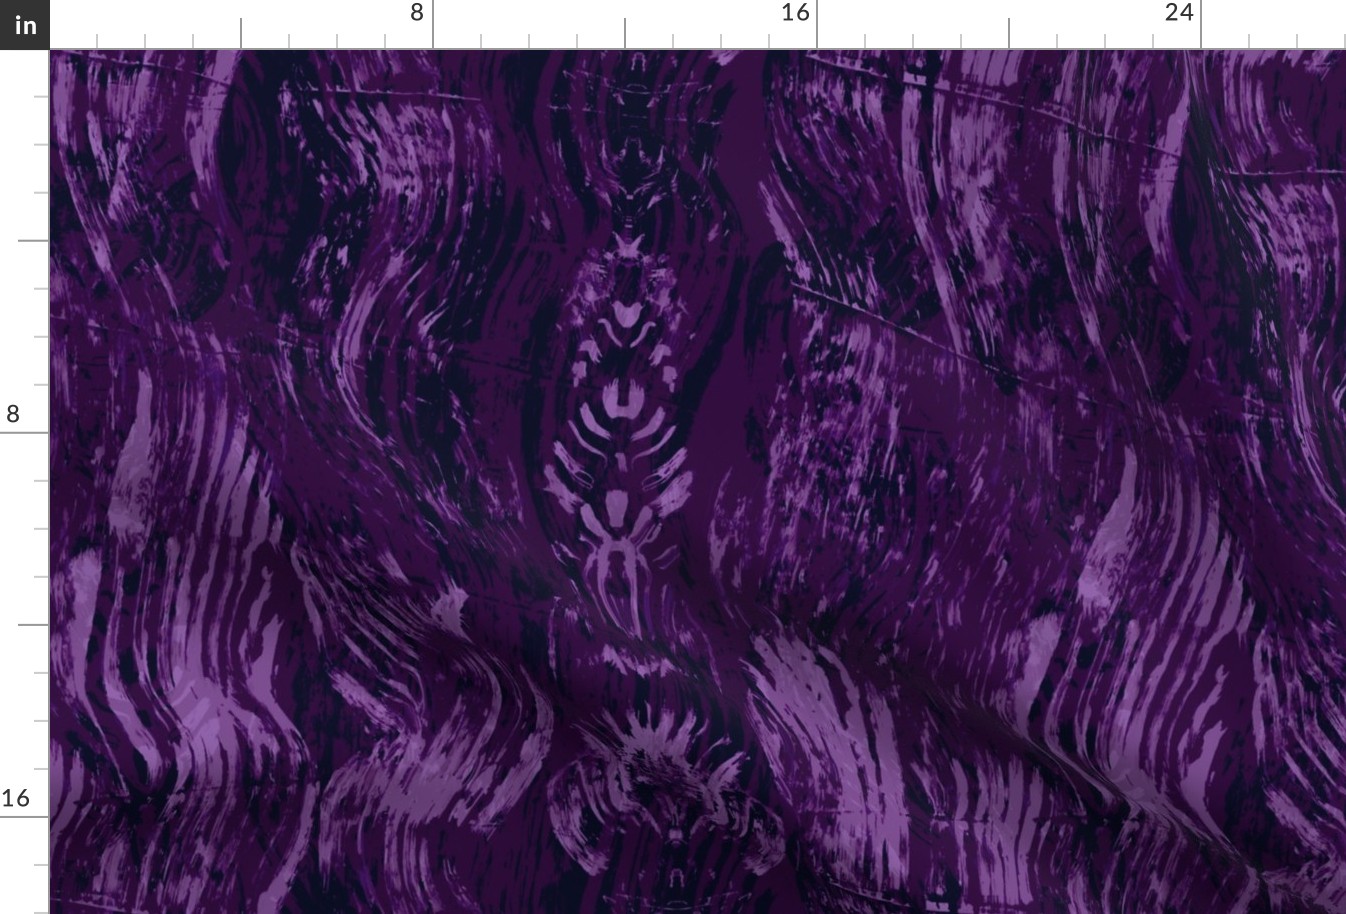 ink-waves_amethyst_orchid_purple